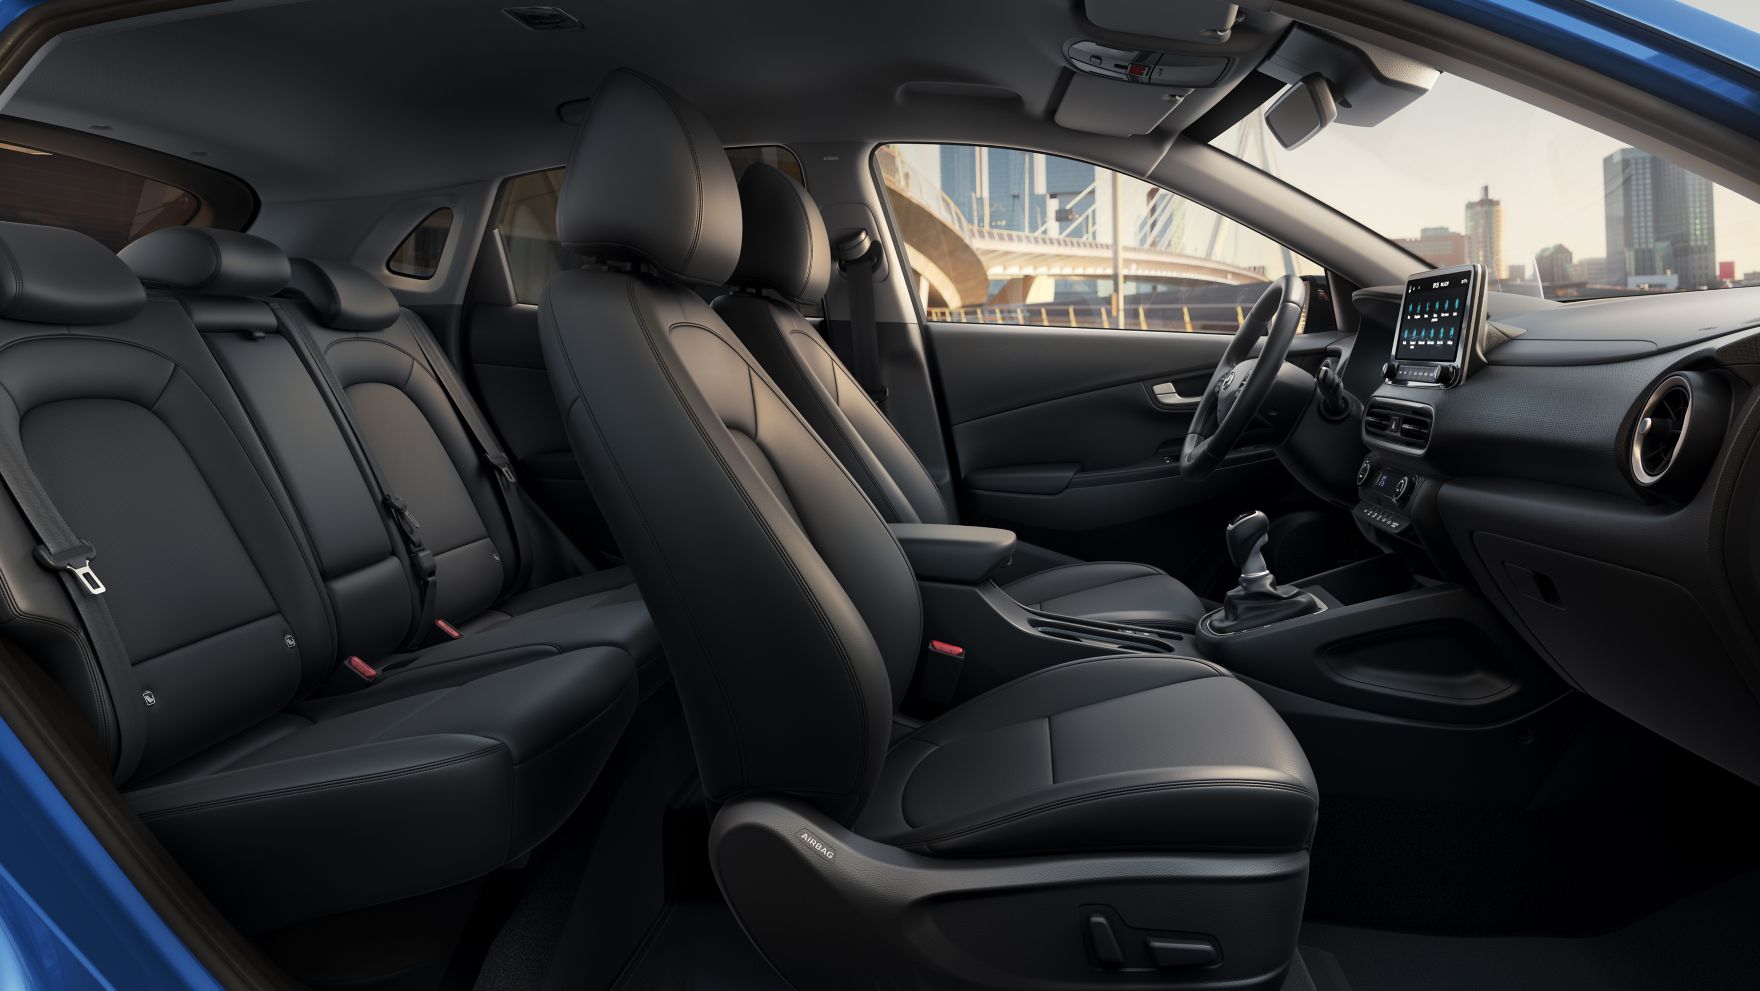 Boční pohled na interiér nového modelu Hyundai KONA se všemi sedadly.